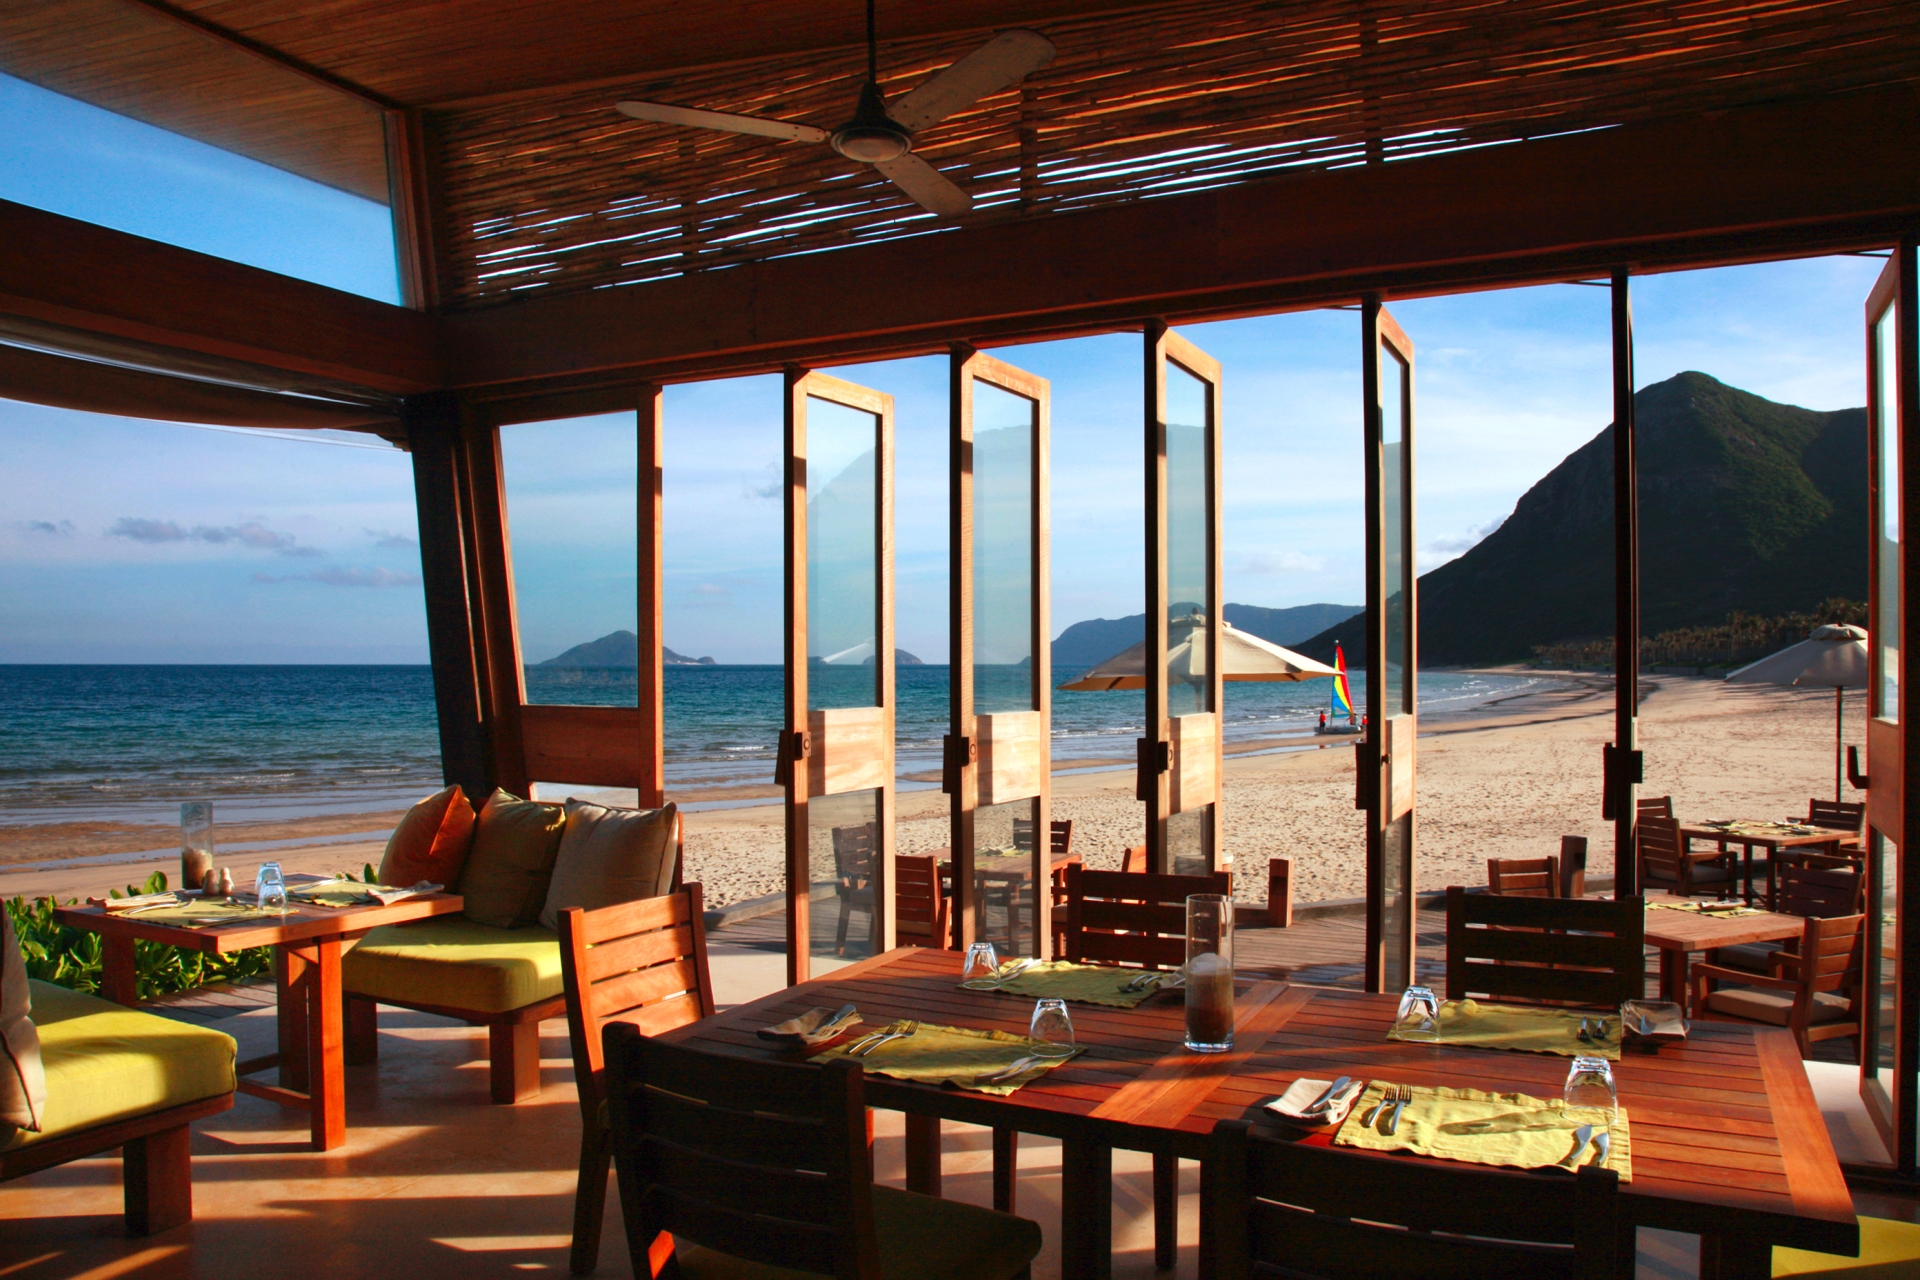 Restaurant by the beach 